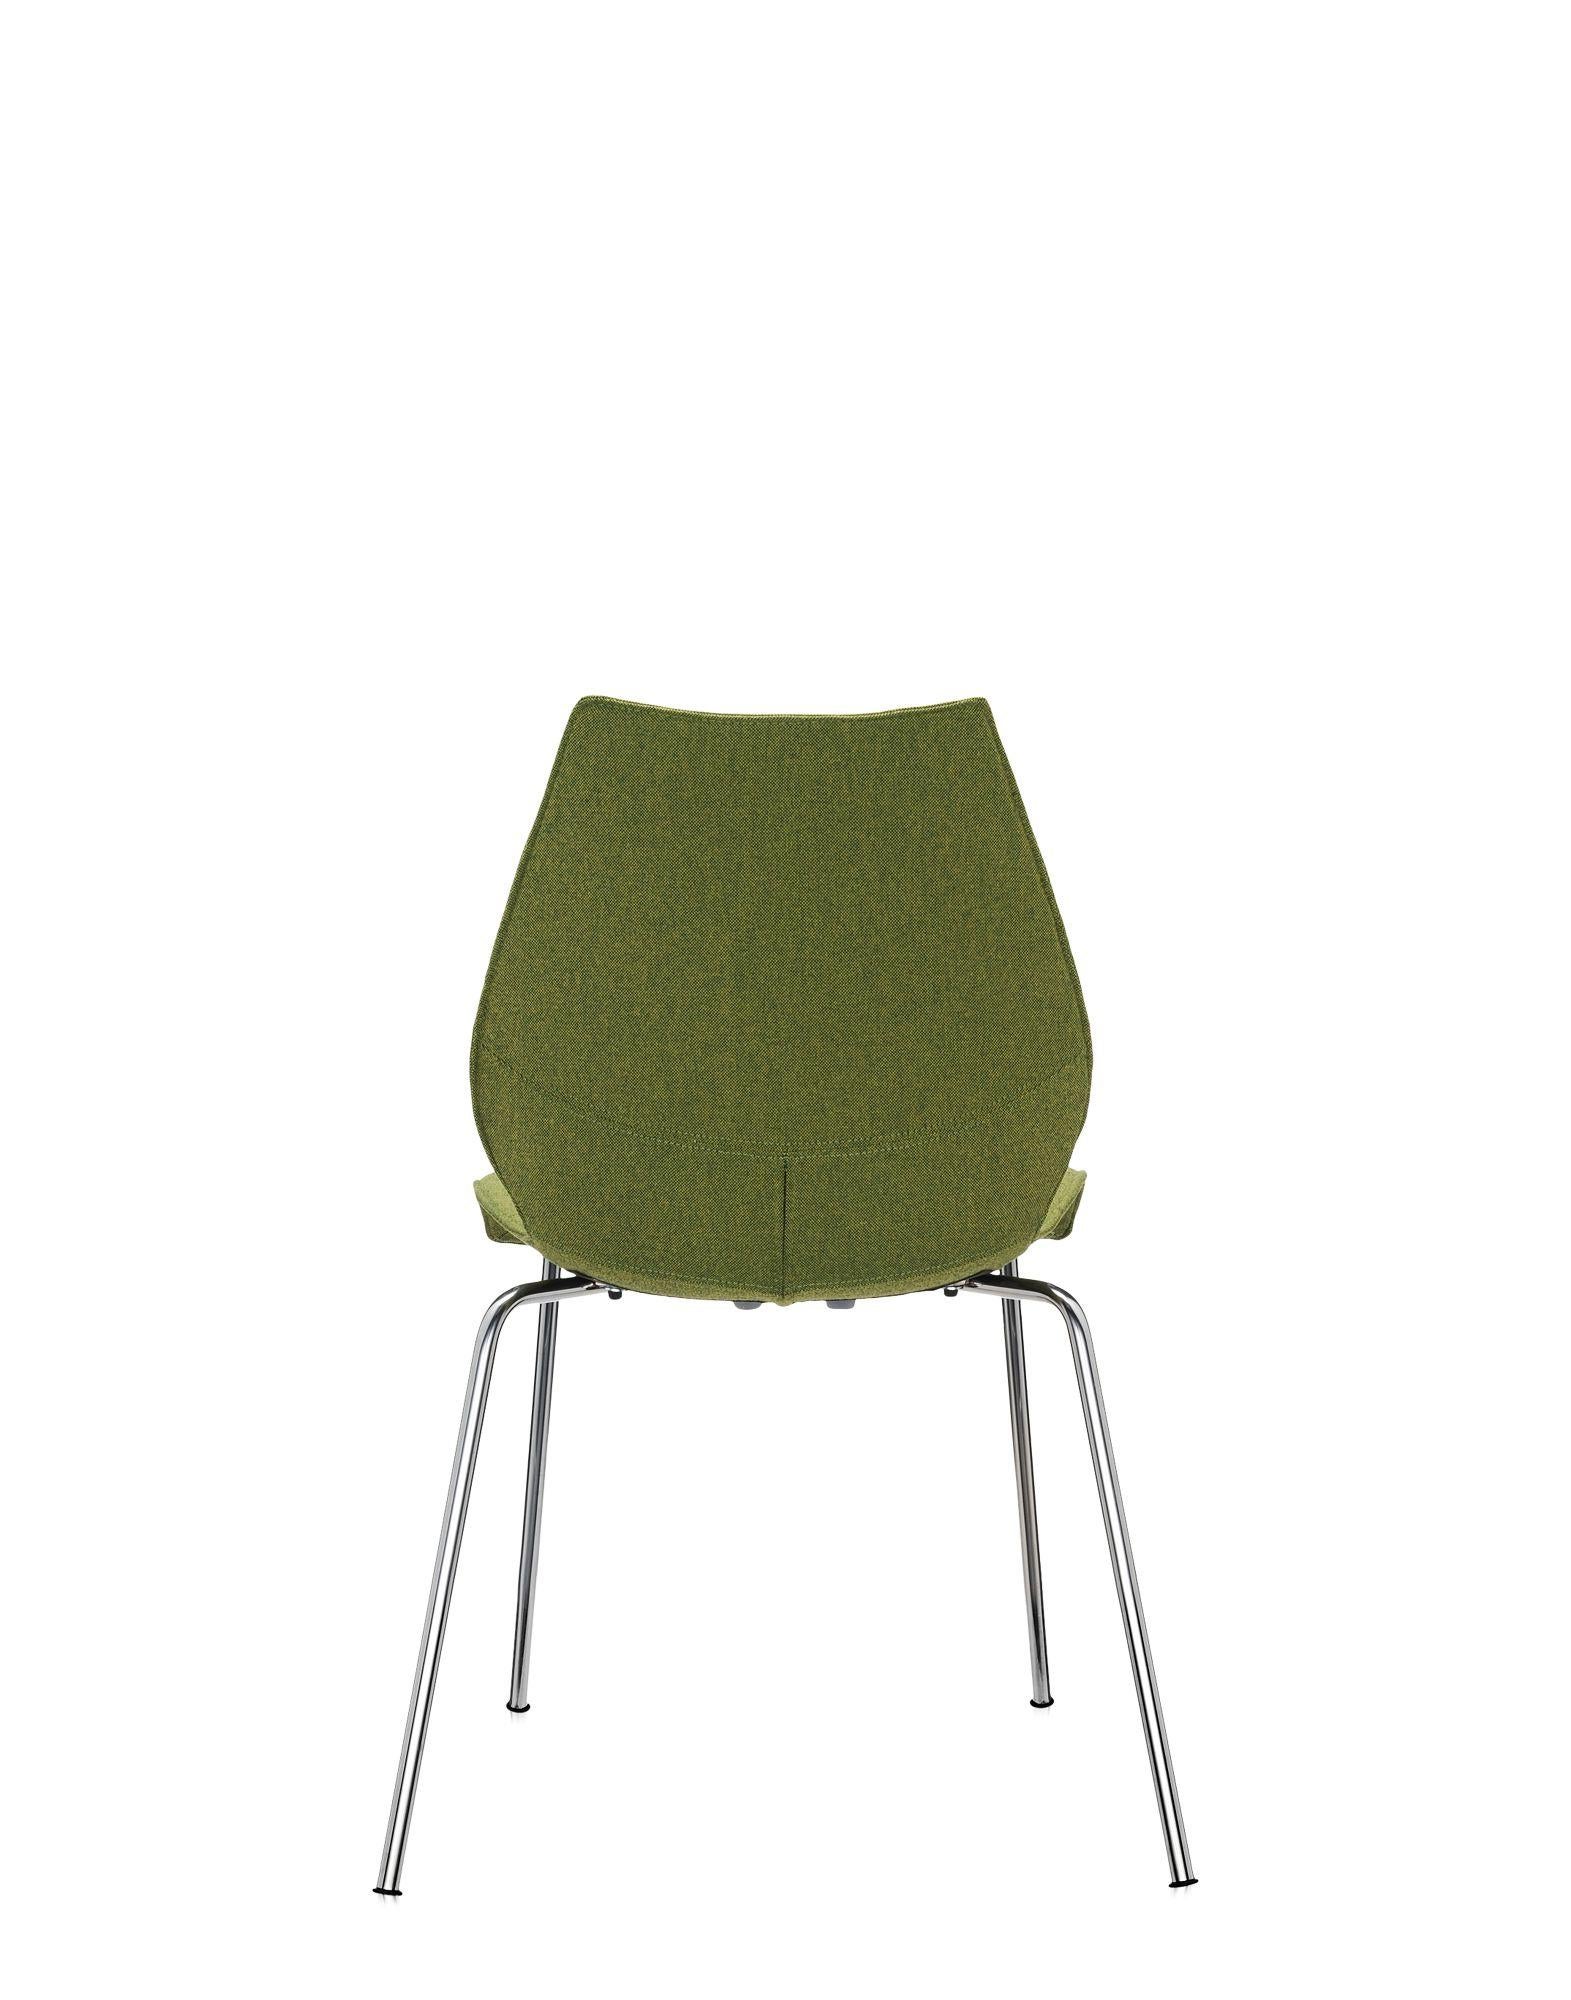 Italian Set of 2 Kartell Maui Soft Trevira Chair in Acid Green by Vico Magistretti